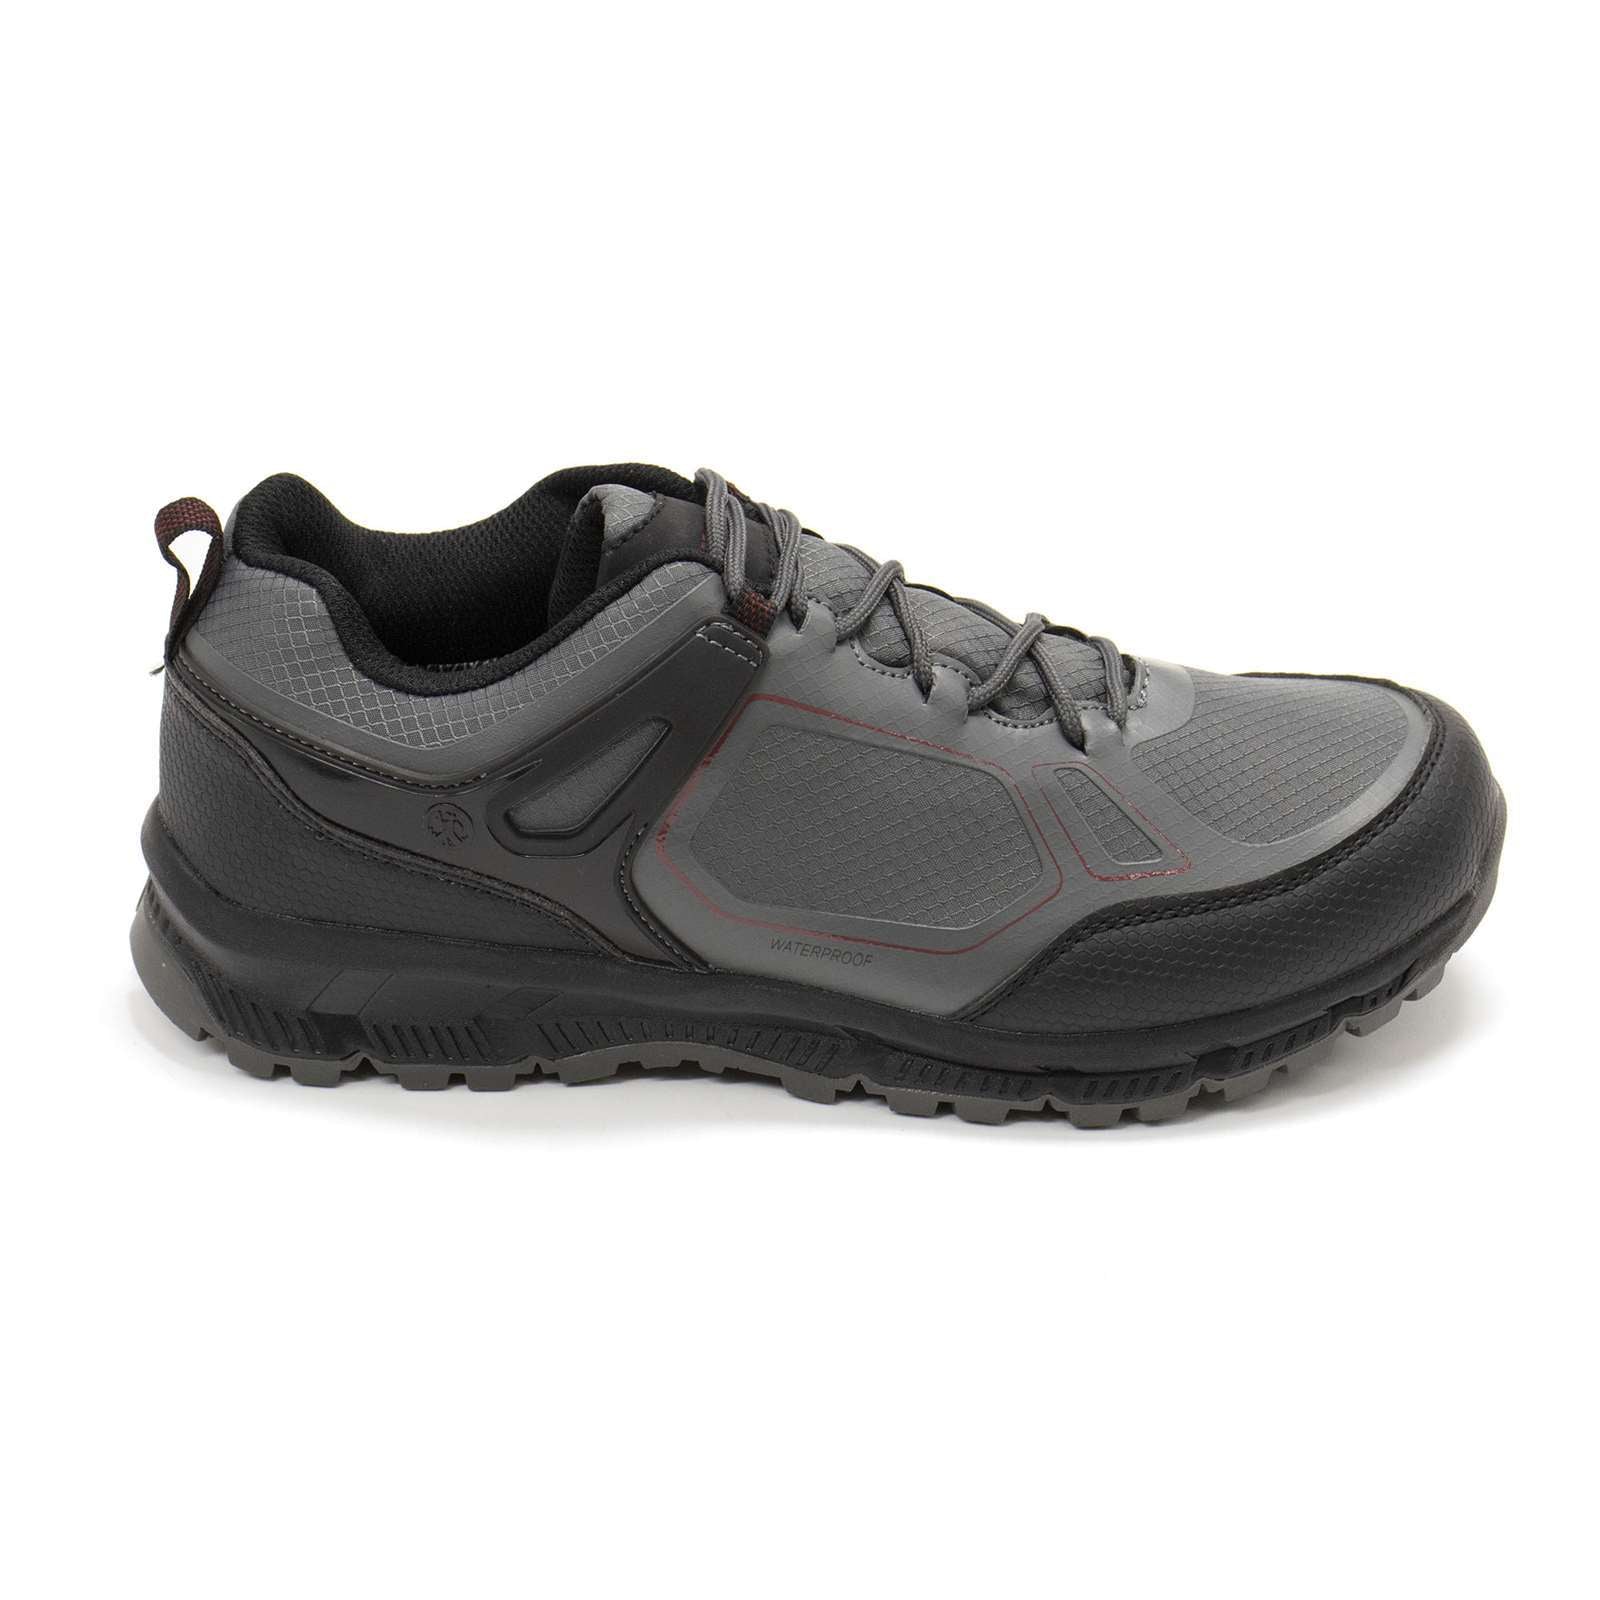 Northside Men Beaumont Waterproof Low Hiking Shoes